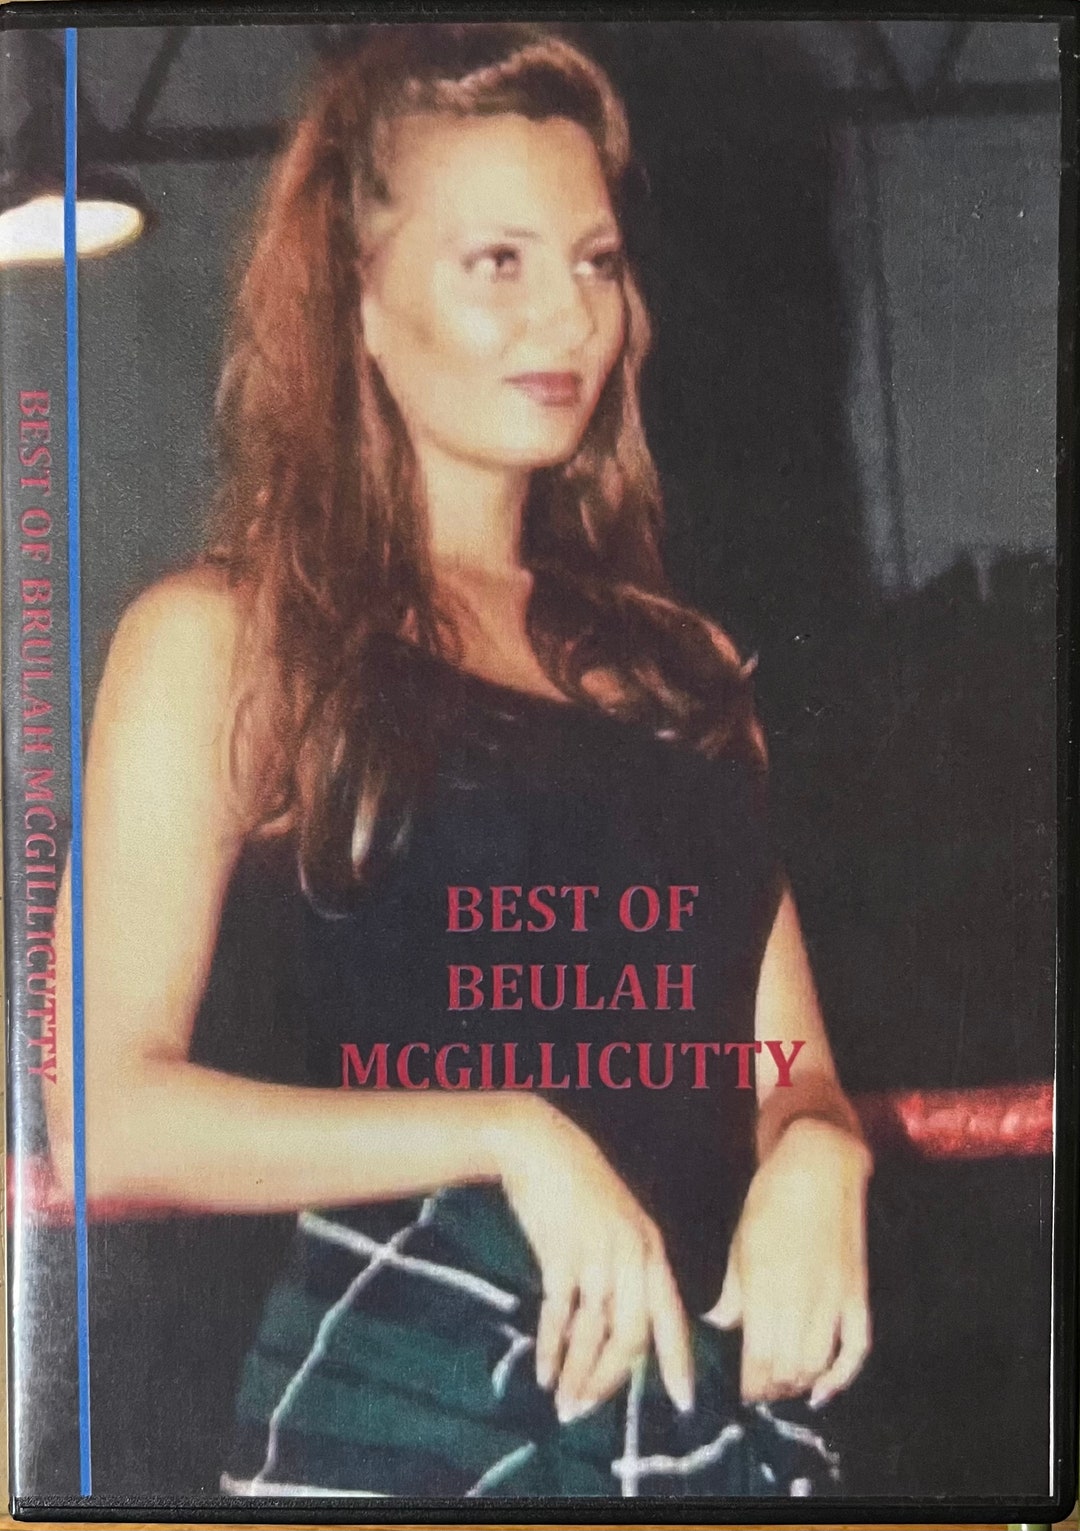 Best of Beulah Mcgillicutty Wrestling Dvd - Etsy